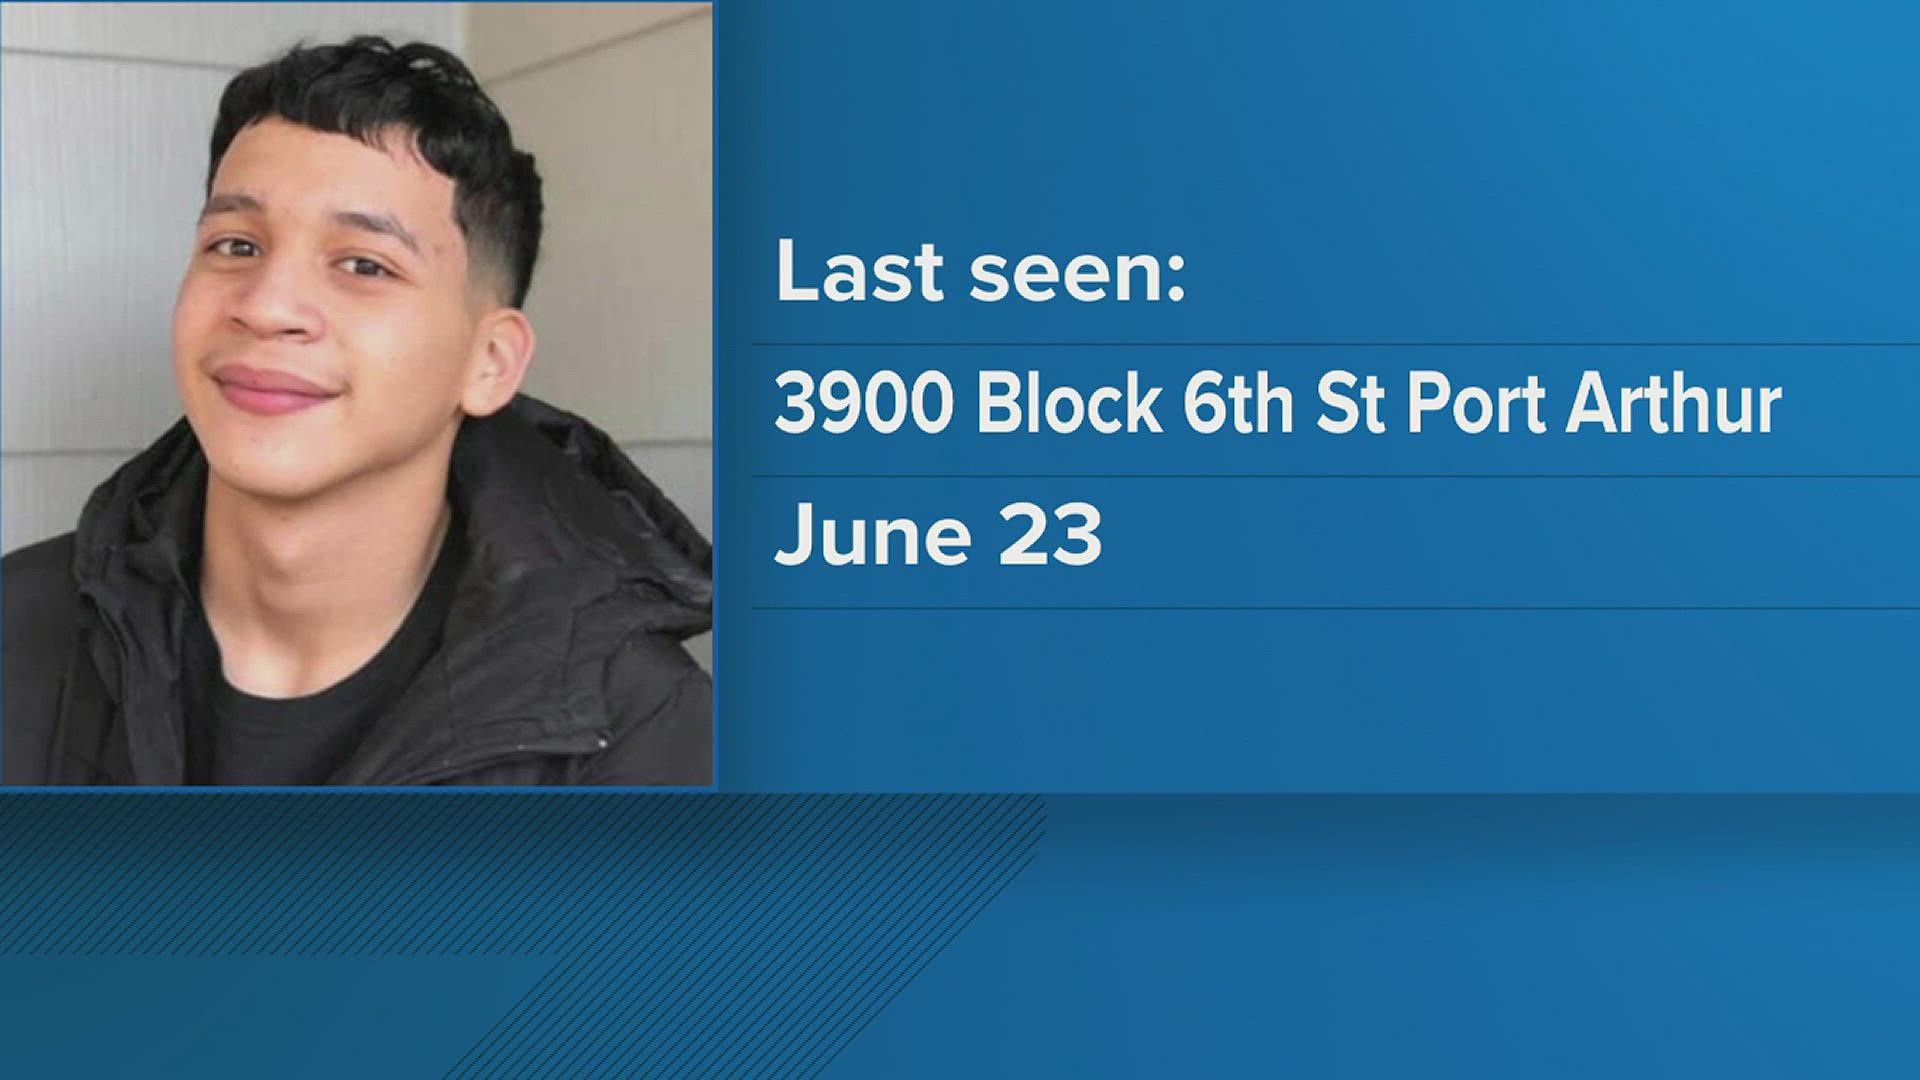 German Salgado was last seen Thursday night sleeping at his home located in the 3900 block of 6th Street in Port Arthur.